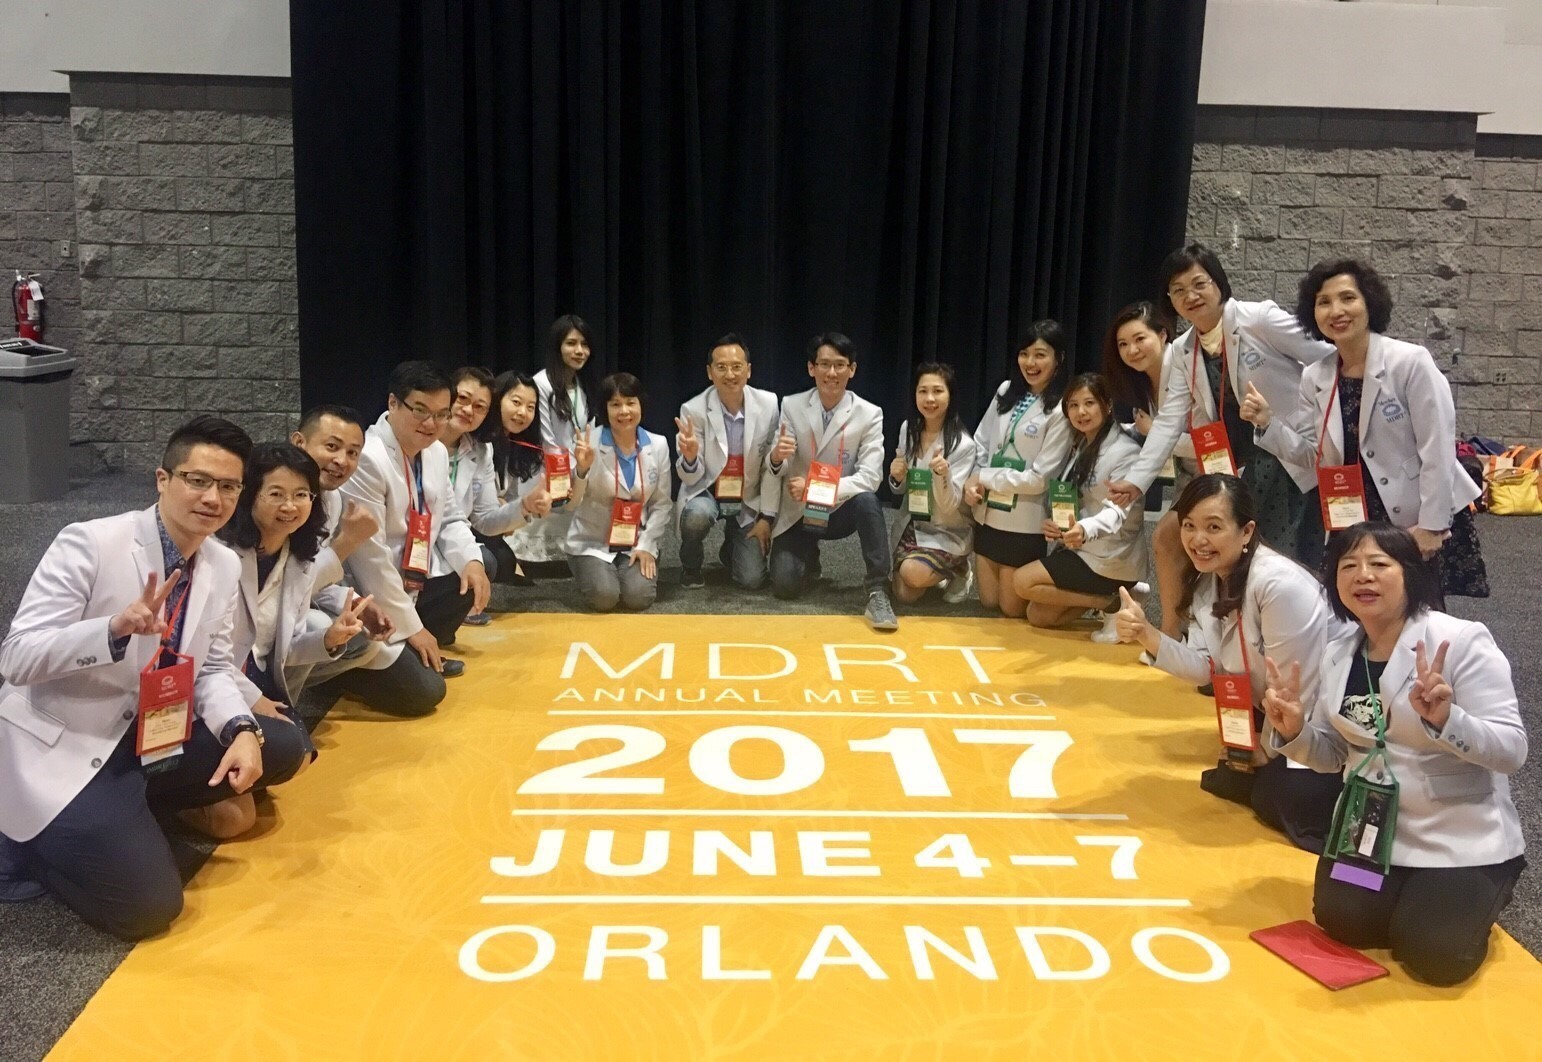 2017 MDRT ��������� Annual Meeting